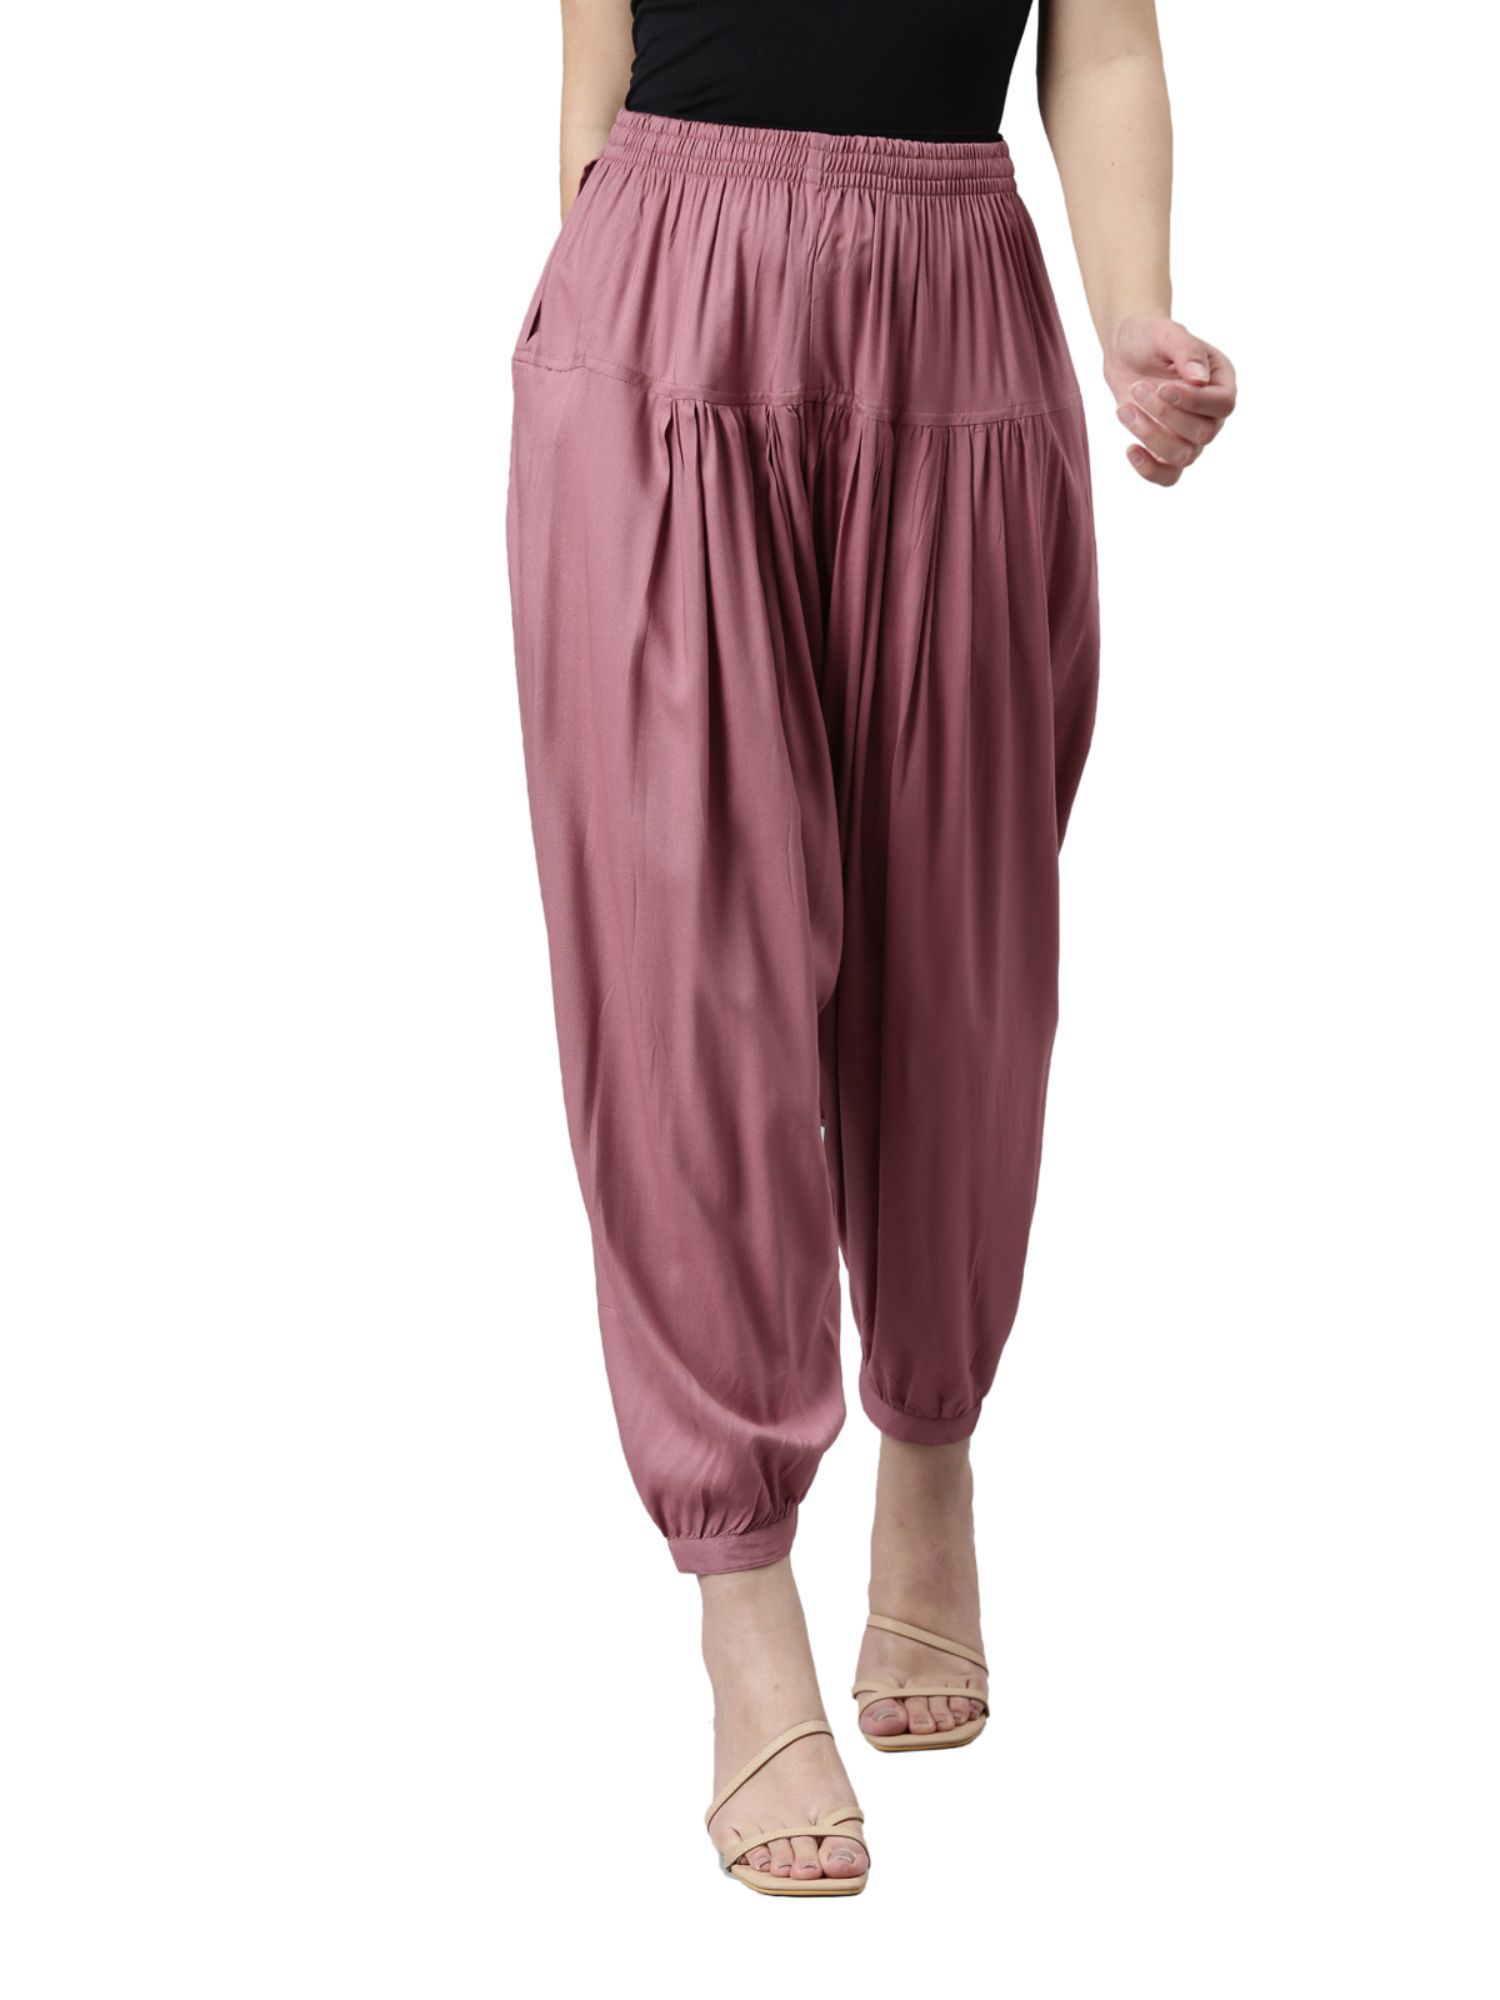 Bohemian Island Harem Pants | High end cotton harem pants since 2014